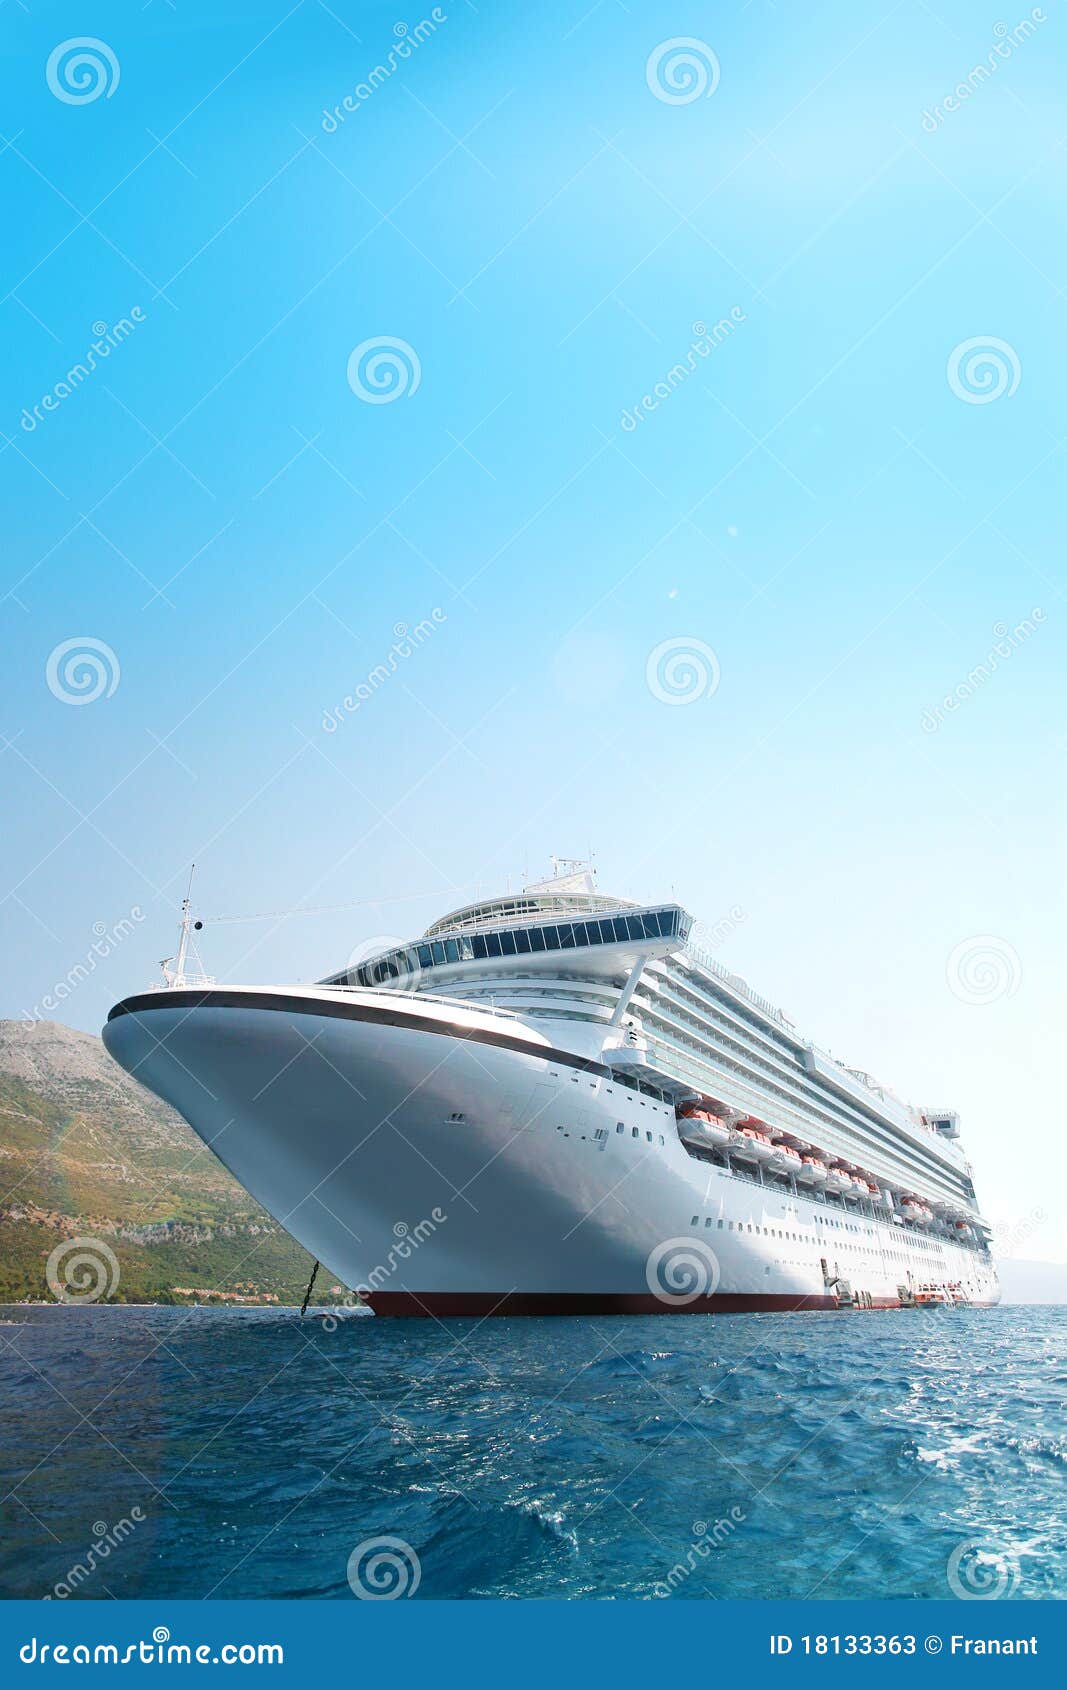 cruise ship in the adriatic sea